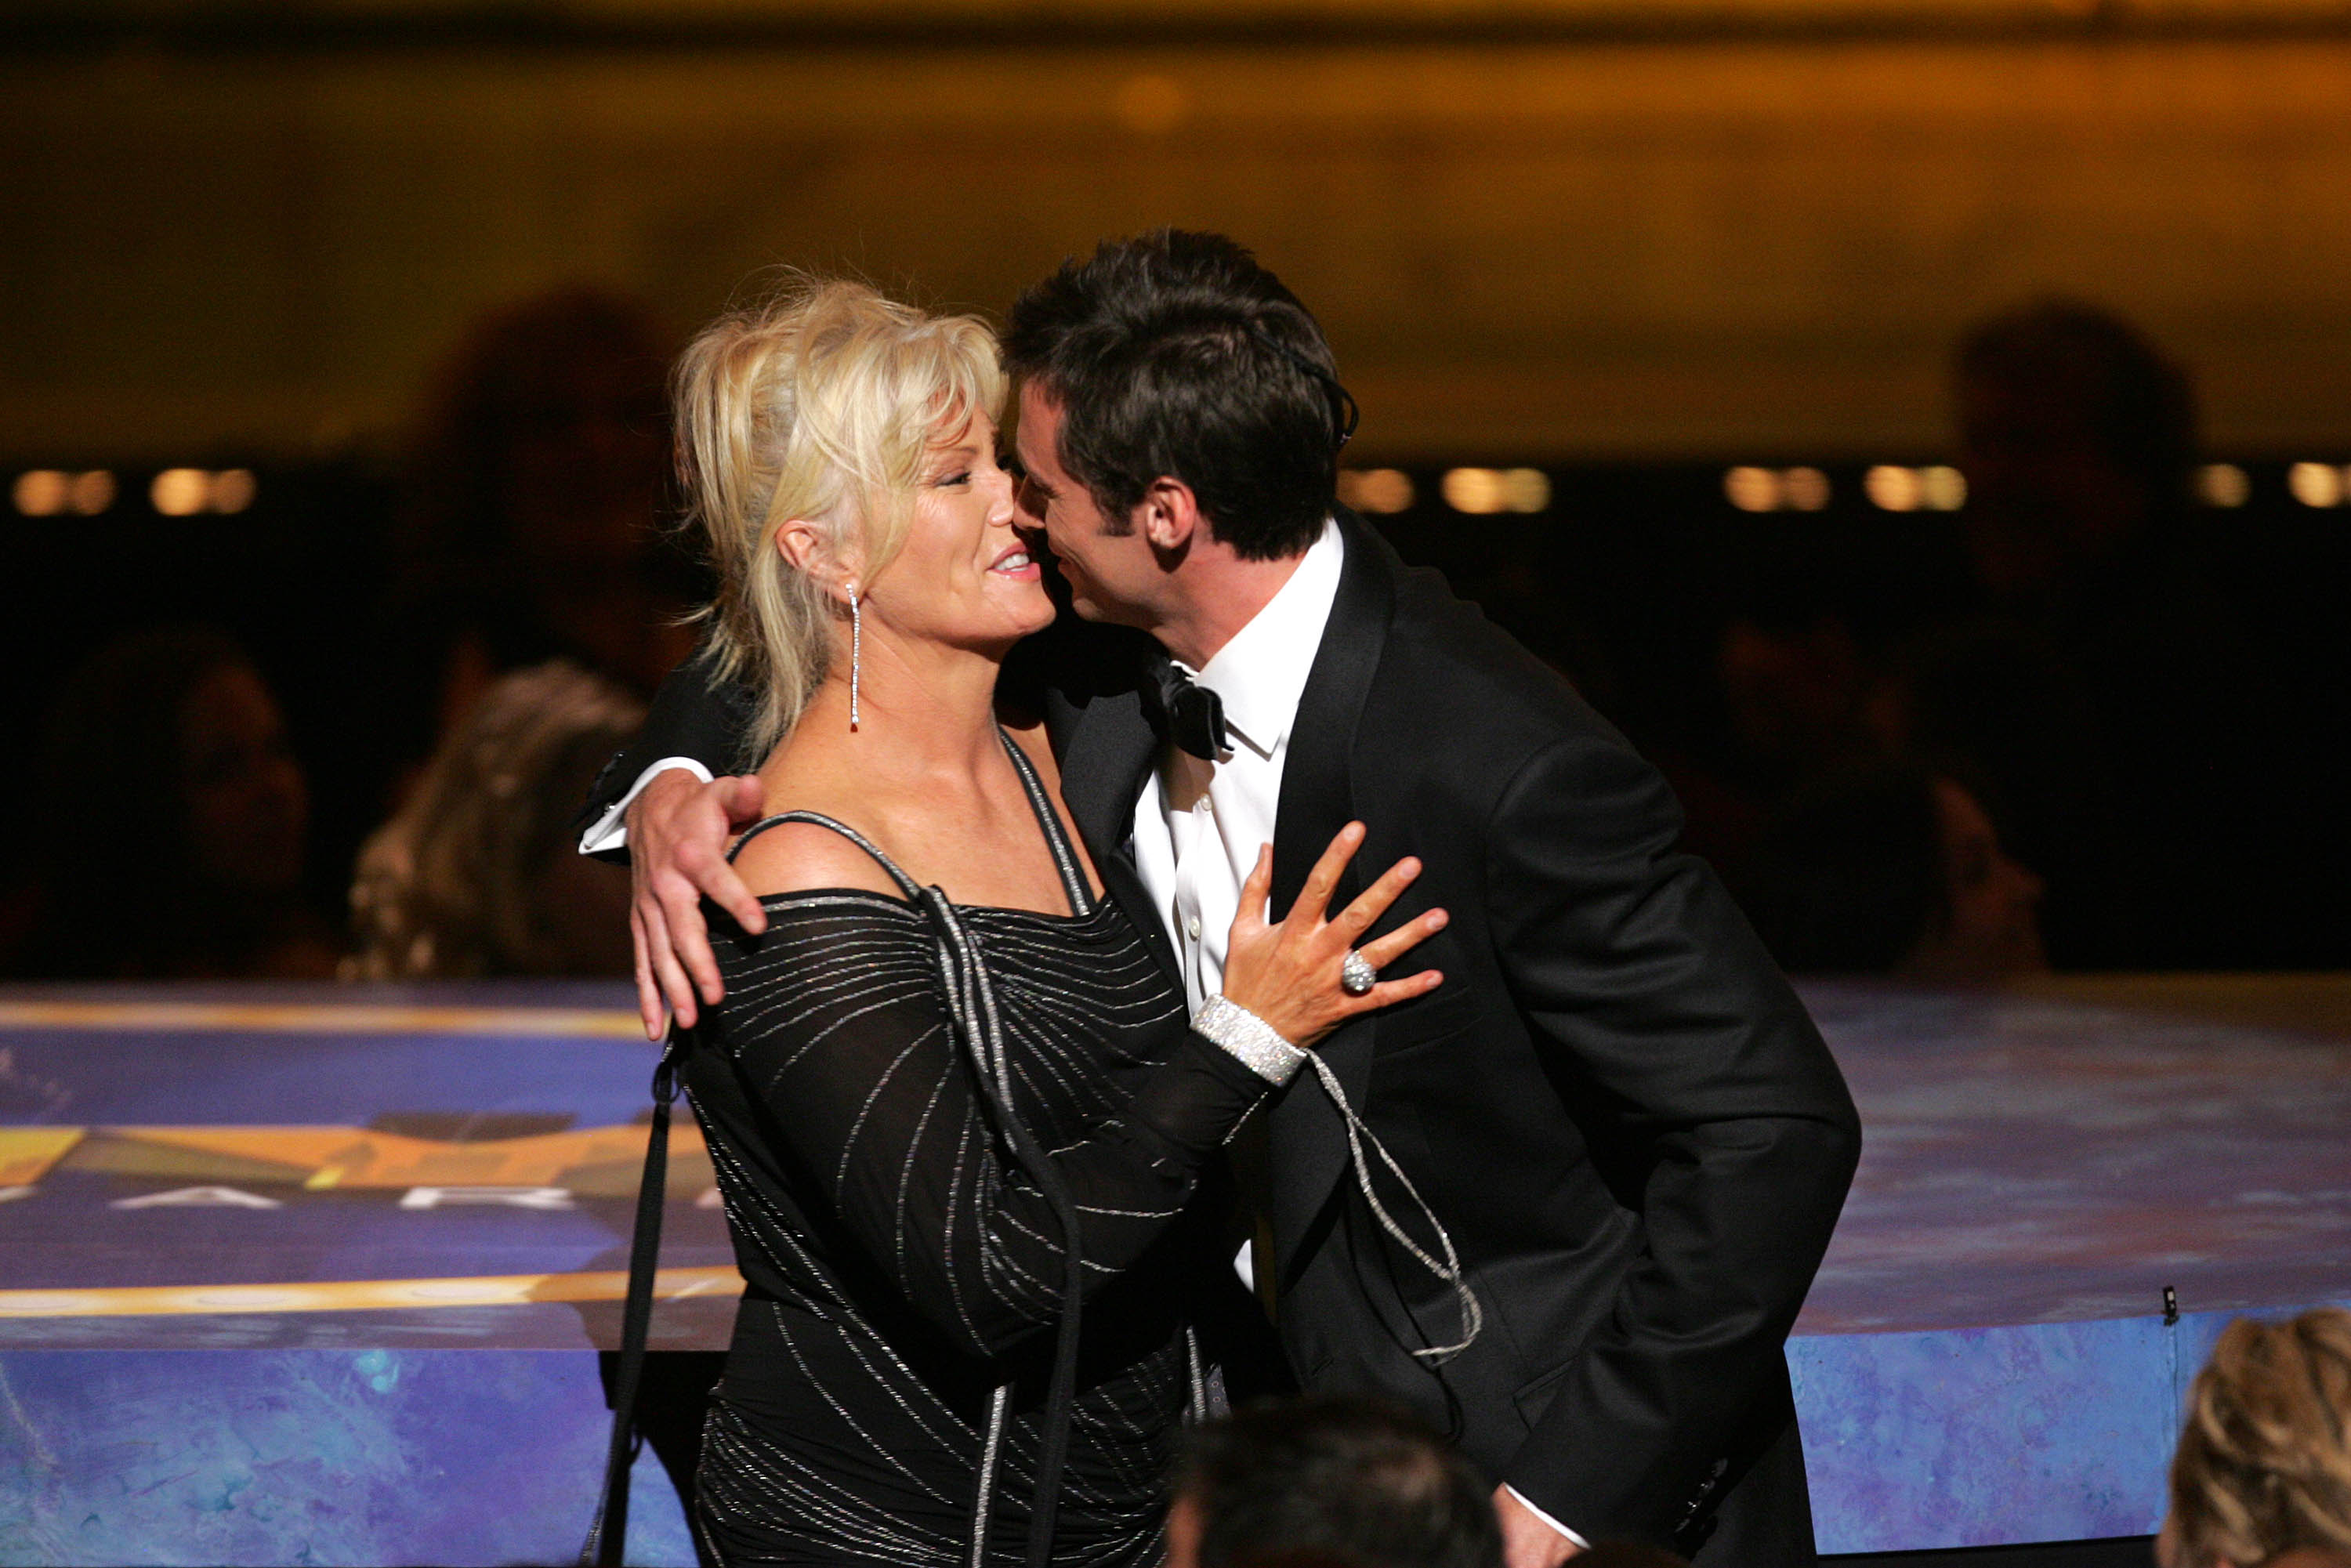 Hugh Jackman and wife Deborah-Lee Furness in New York in 2005 | Source: Getty images